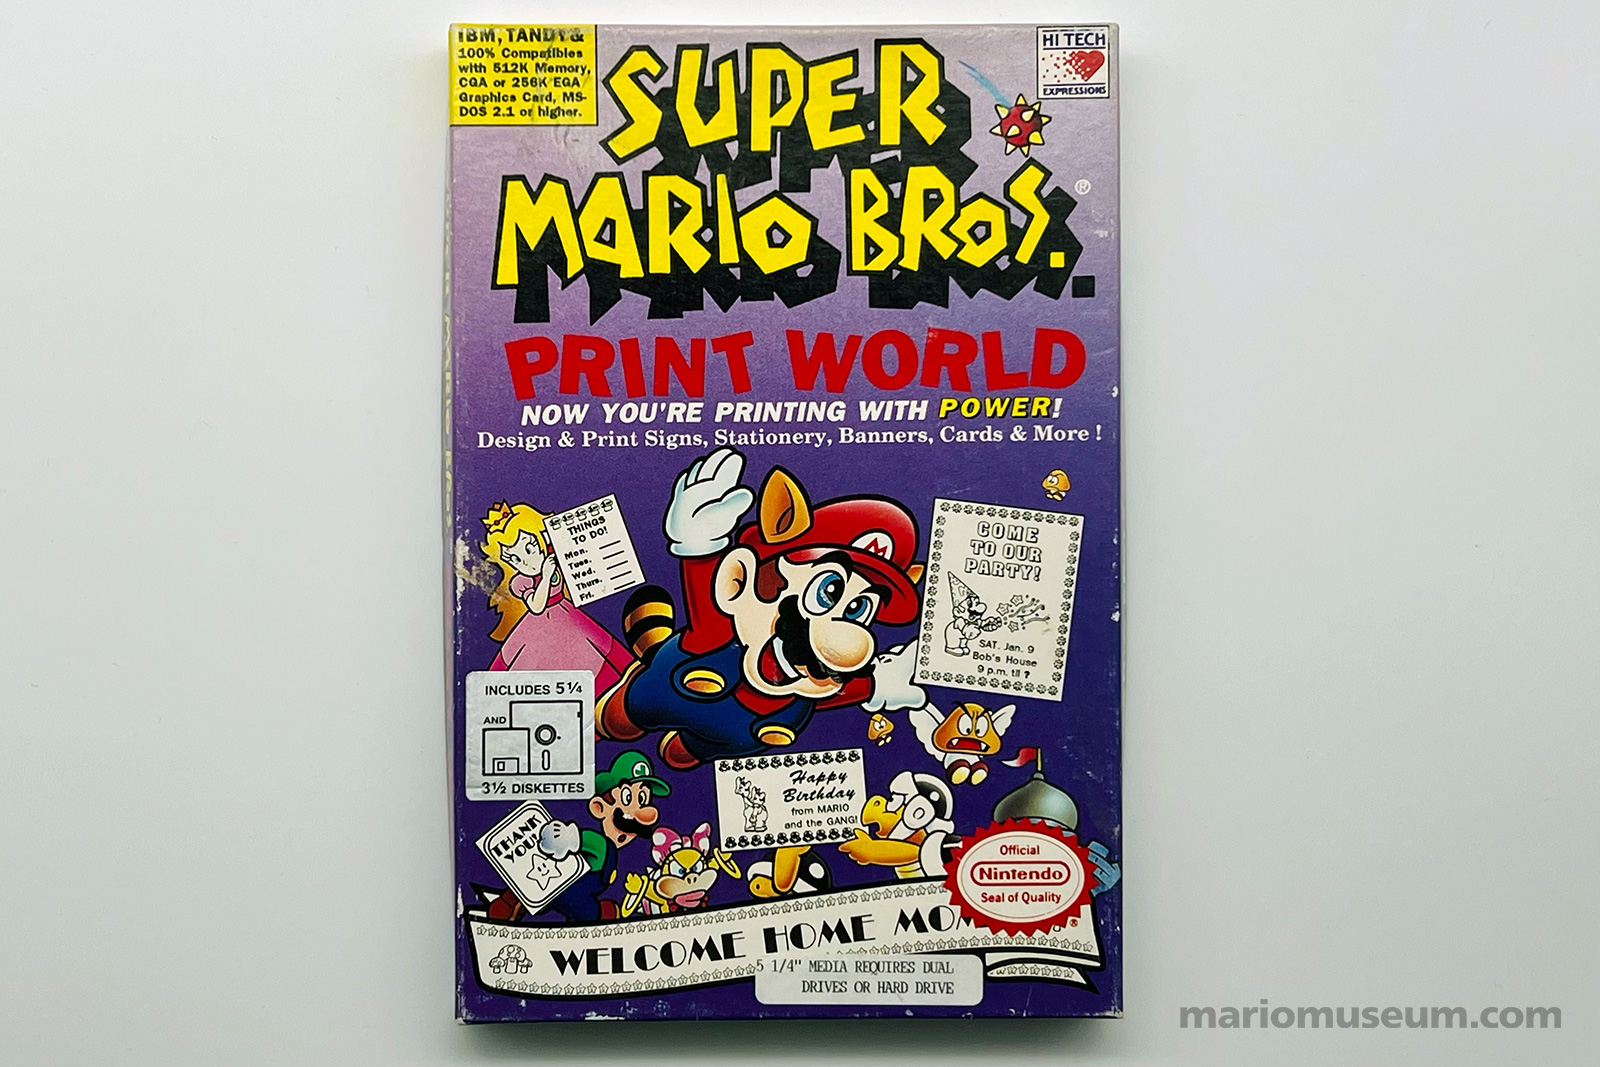 Super Mario Bros Print World, IBM Tandy